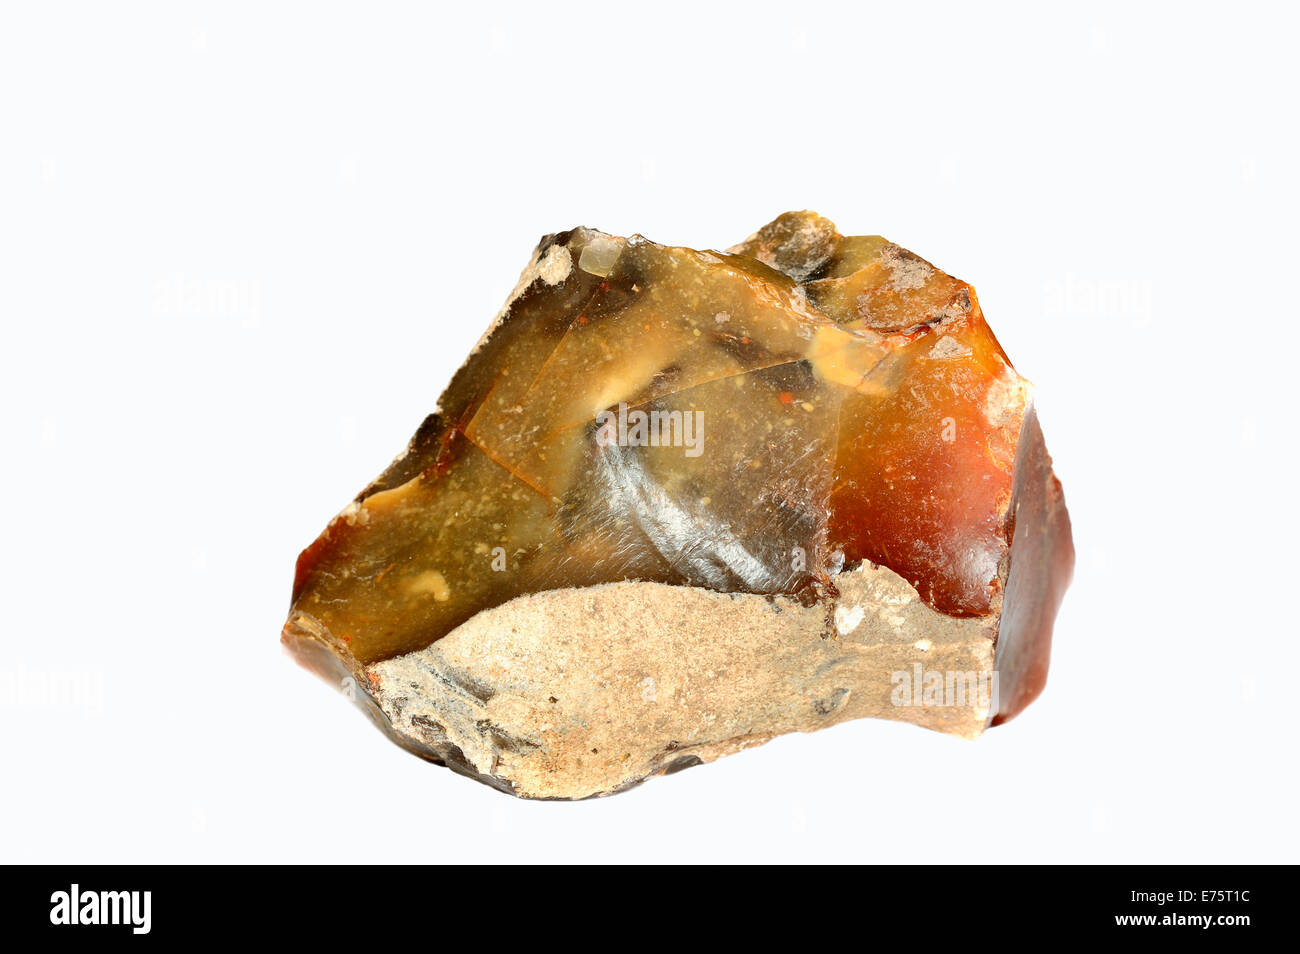 Rosa ruvida pietra focaia (Calcedonio) isolato Foto stock - Alamy